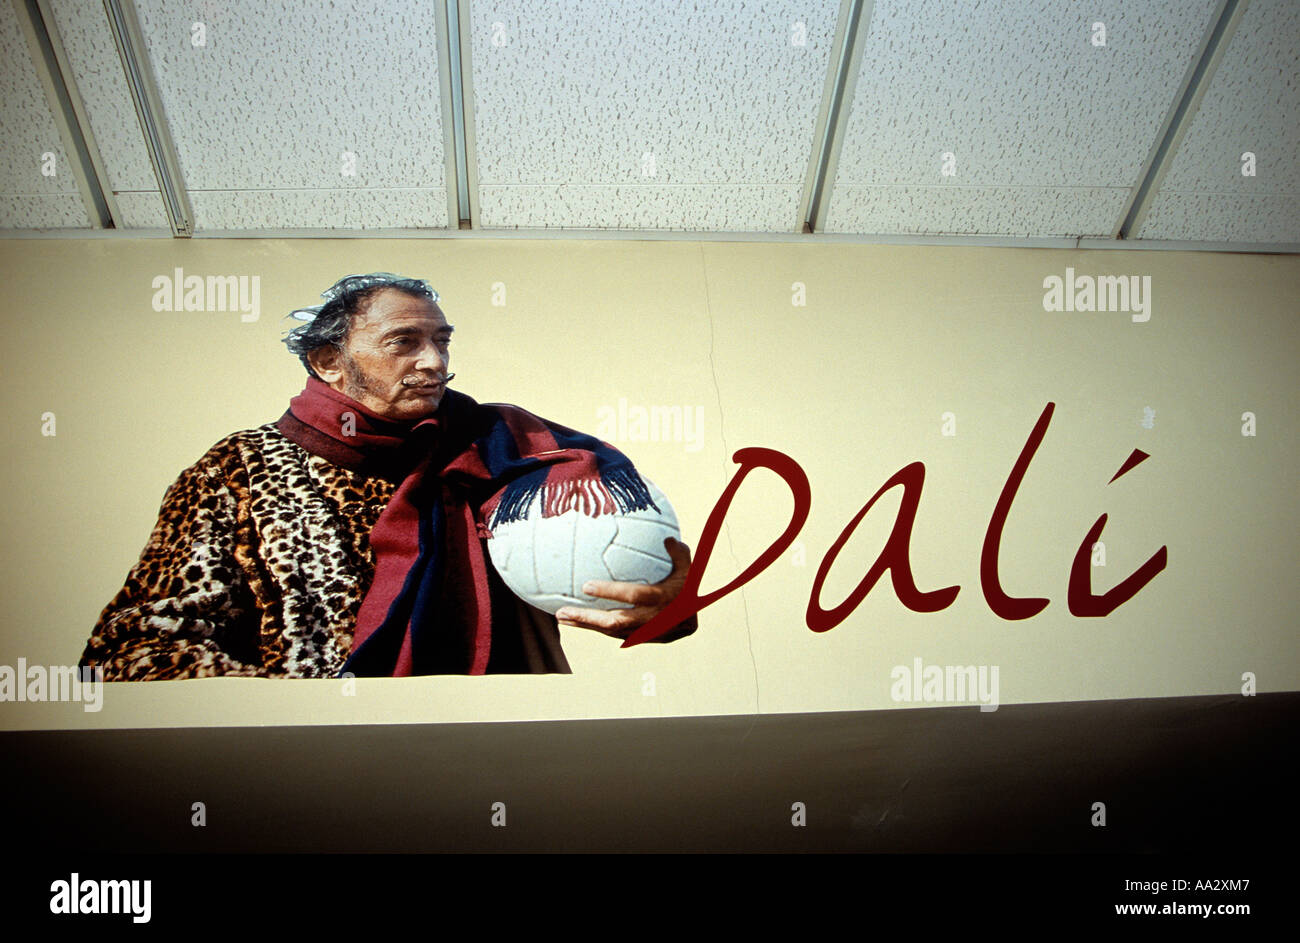 Salvador Dali photograph, Nou Camp Stadium, Barcelona Football Club, Barcelona, Spain Stock Photo